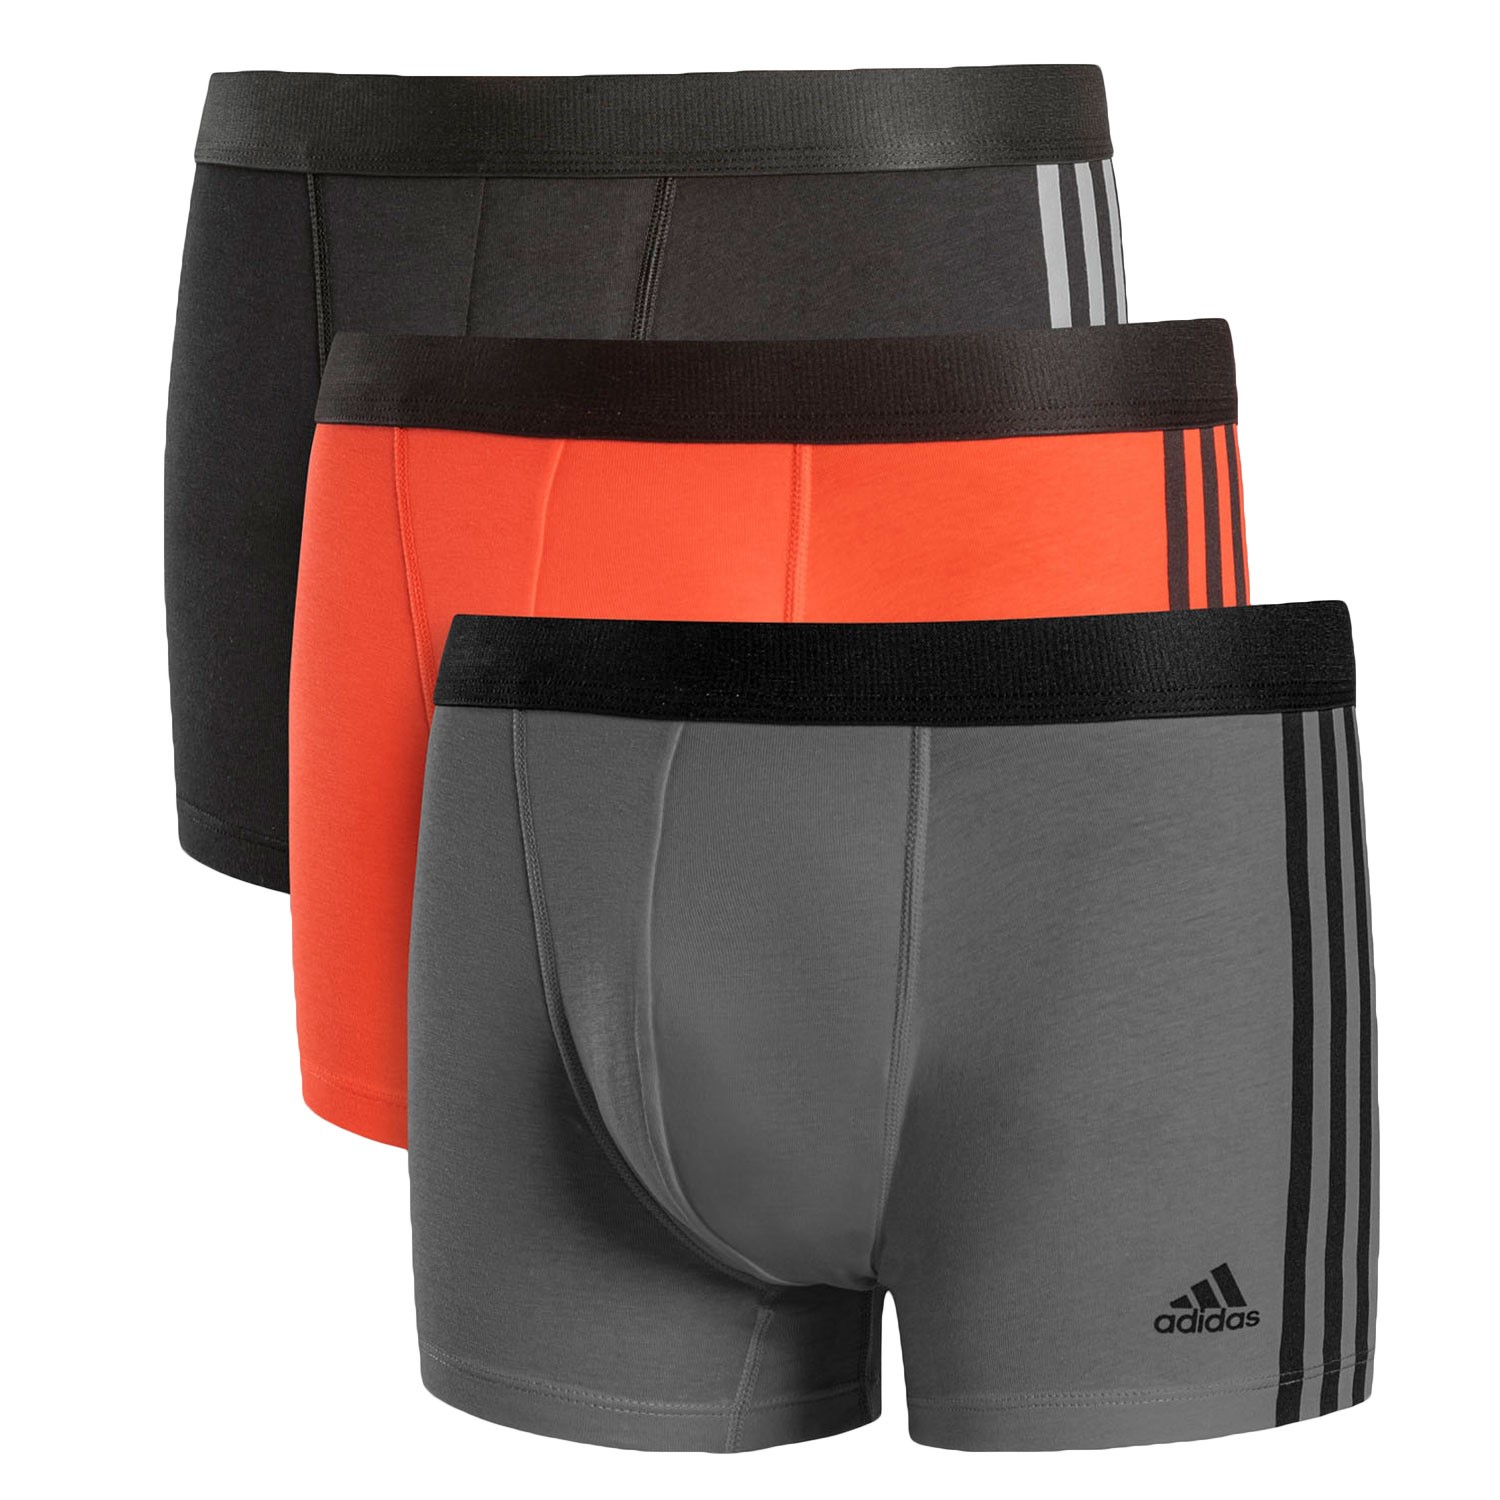 Boxers adidas Performance Active Flex Cotton Trunk Underwear (3